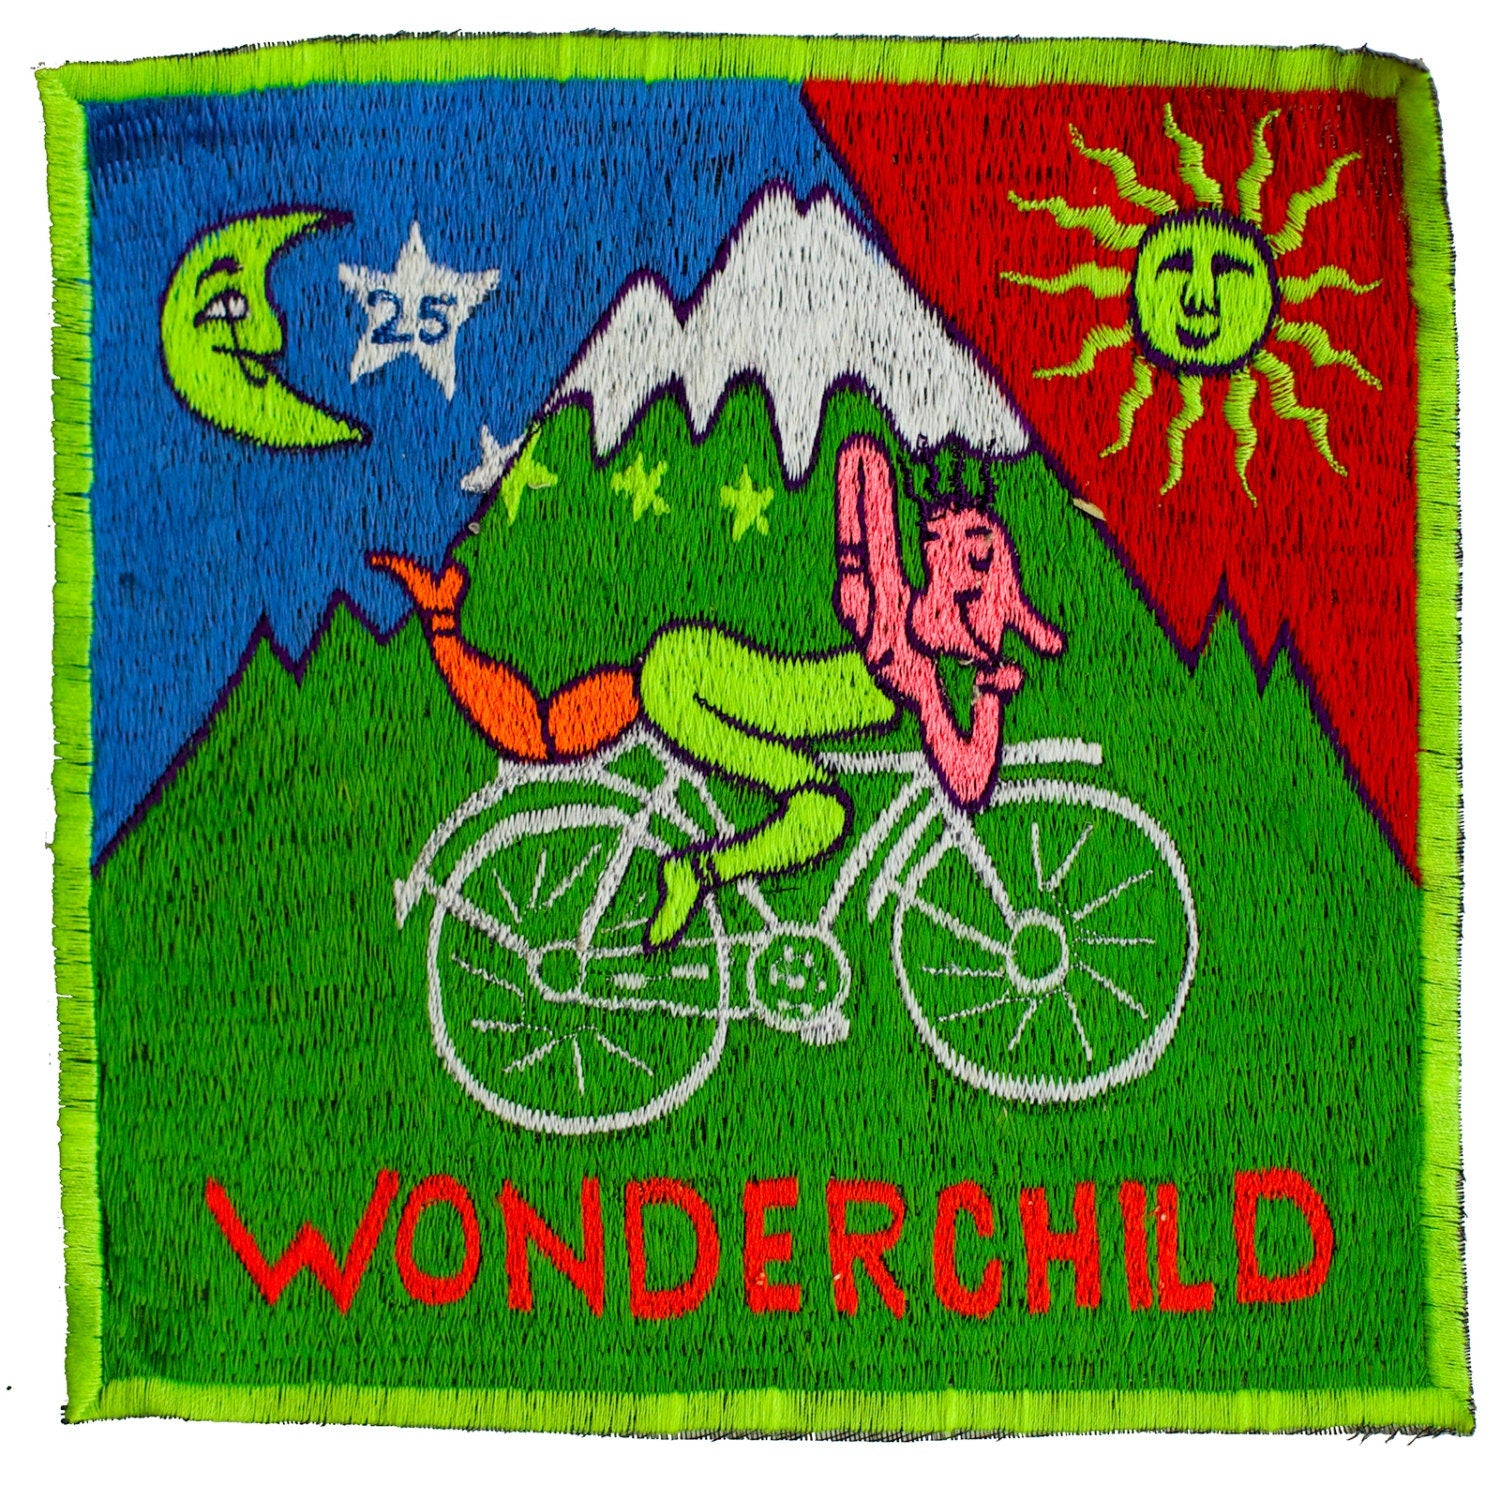 Wonderchild LSD Hofmann T-Shirt blacklight handmade embroidery no print psy t-shirt Timothy Leary acid utopia vintage artwork